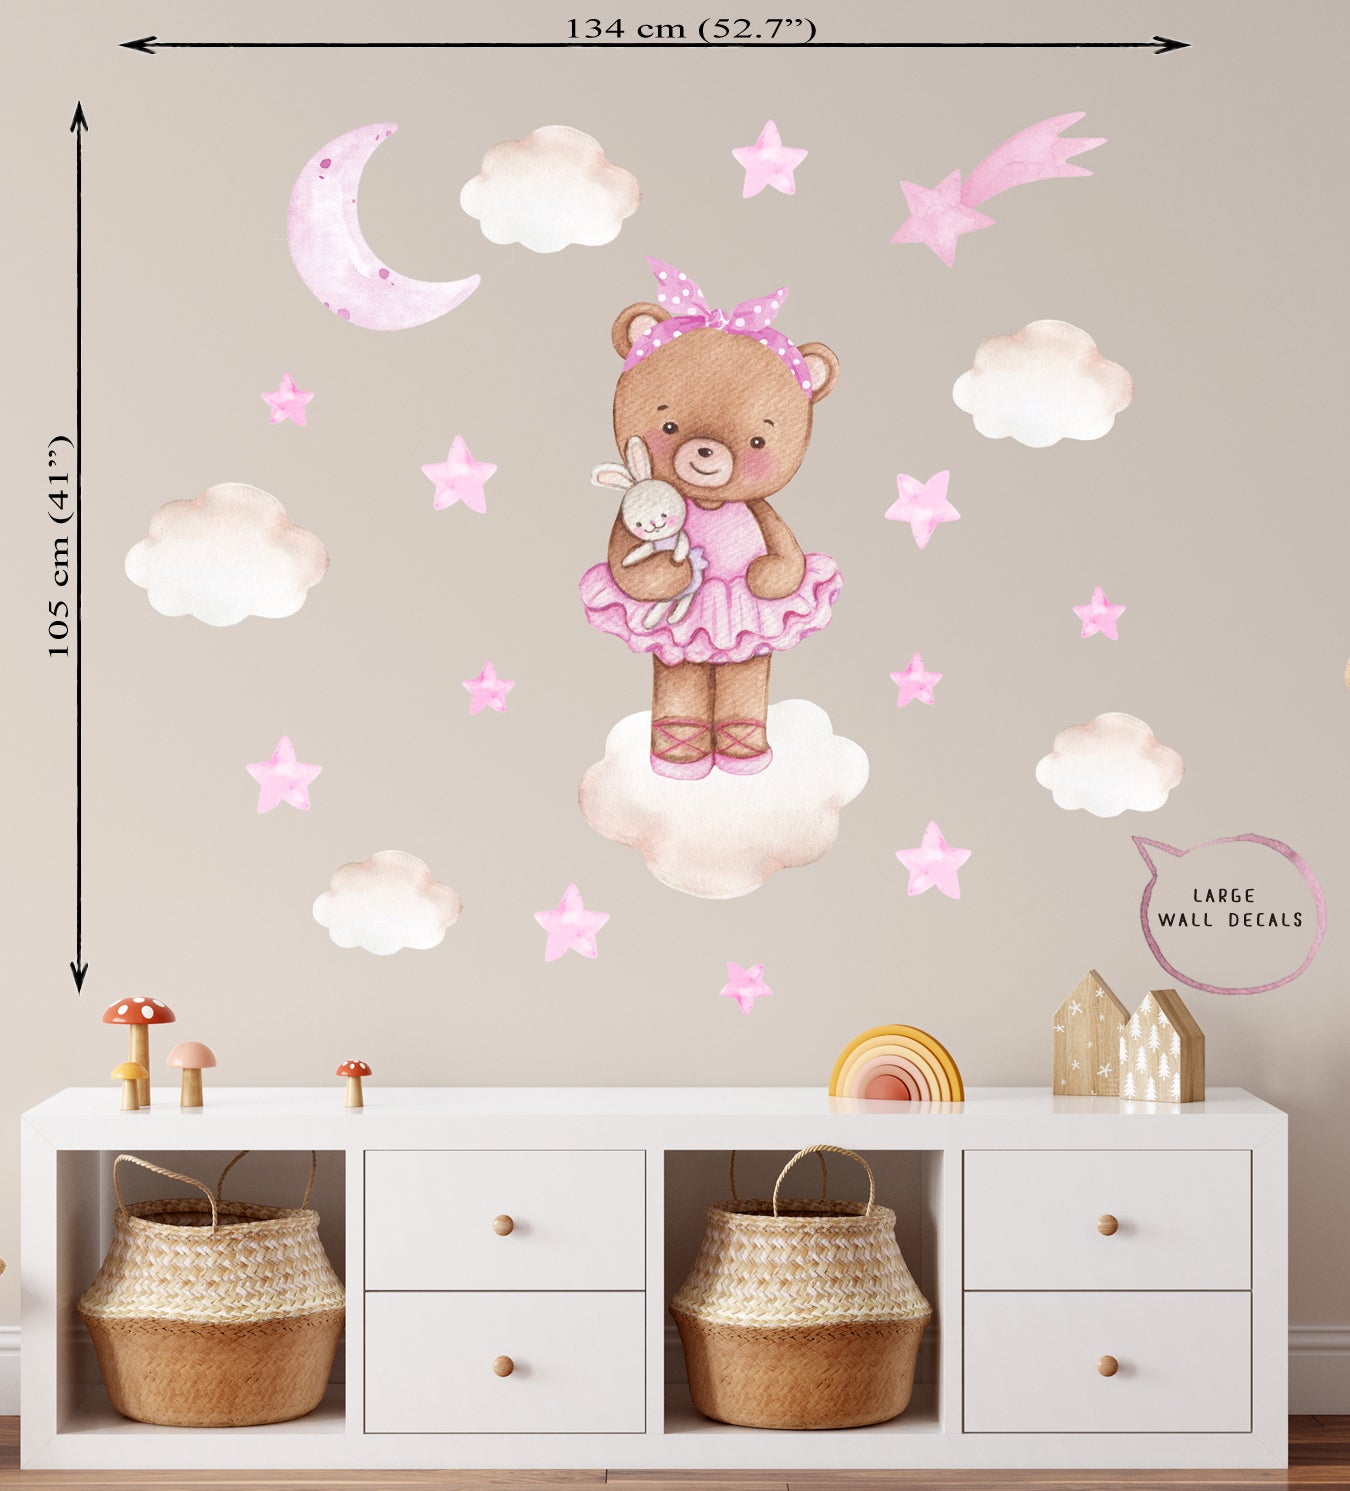 Teddy bear ballerina - wall decals for children's room. Pink stars.